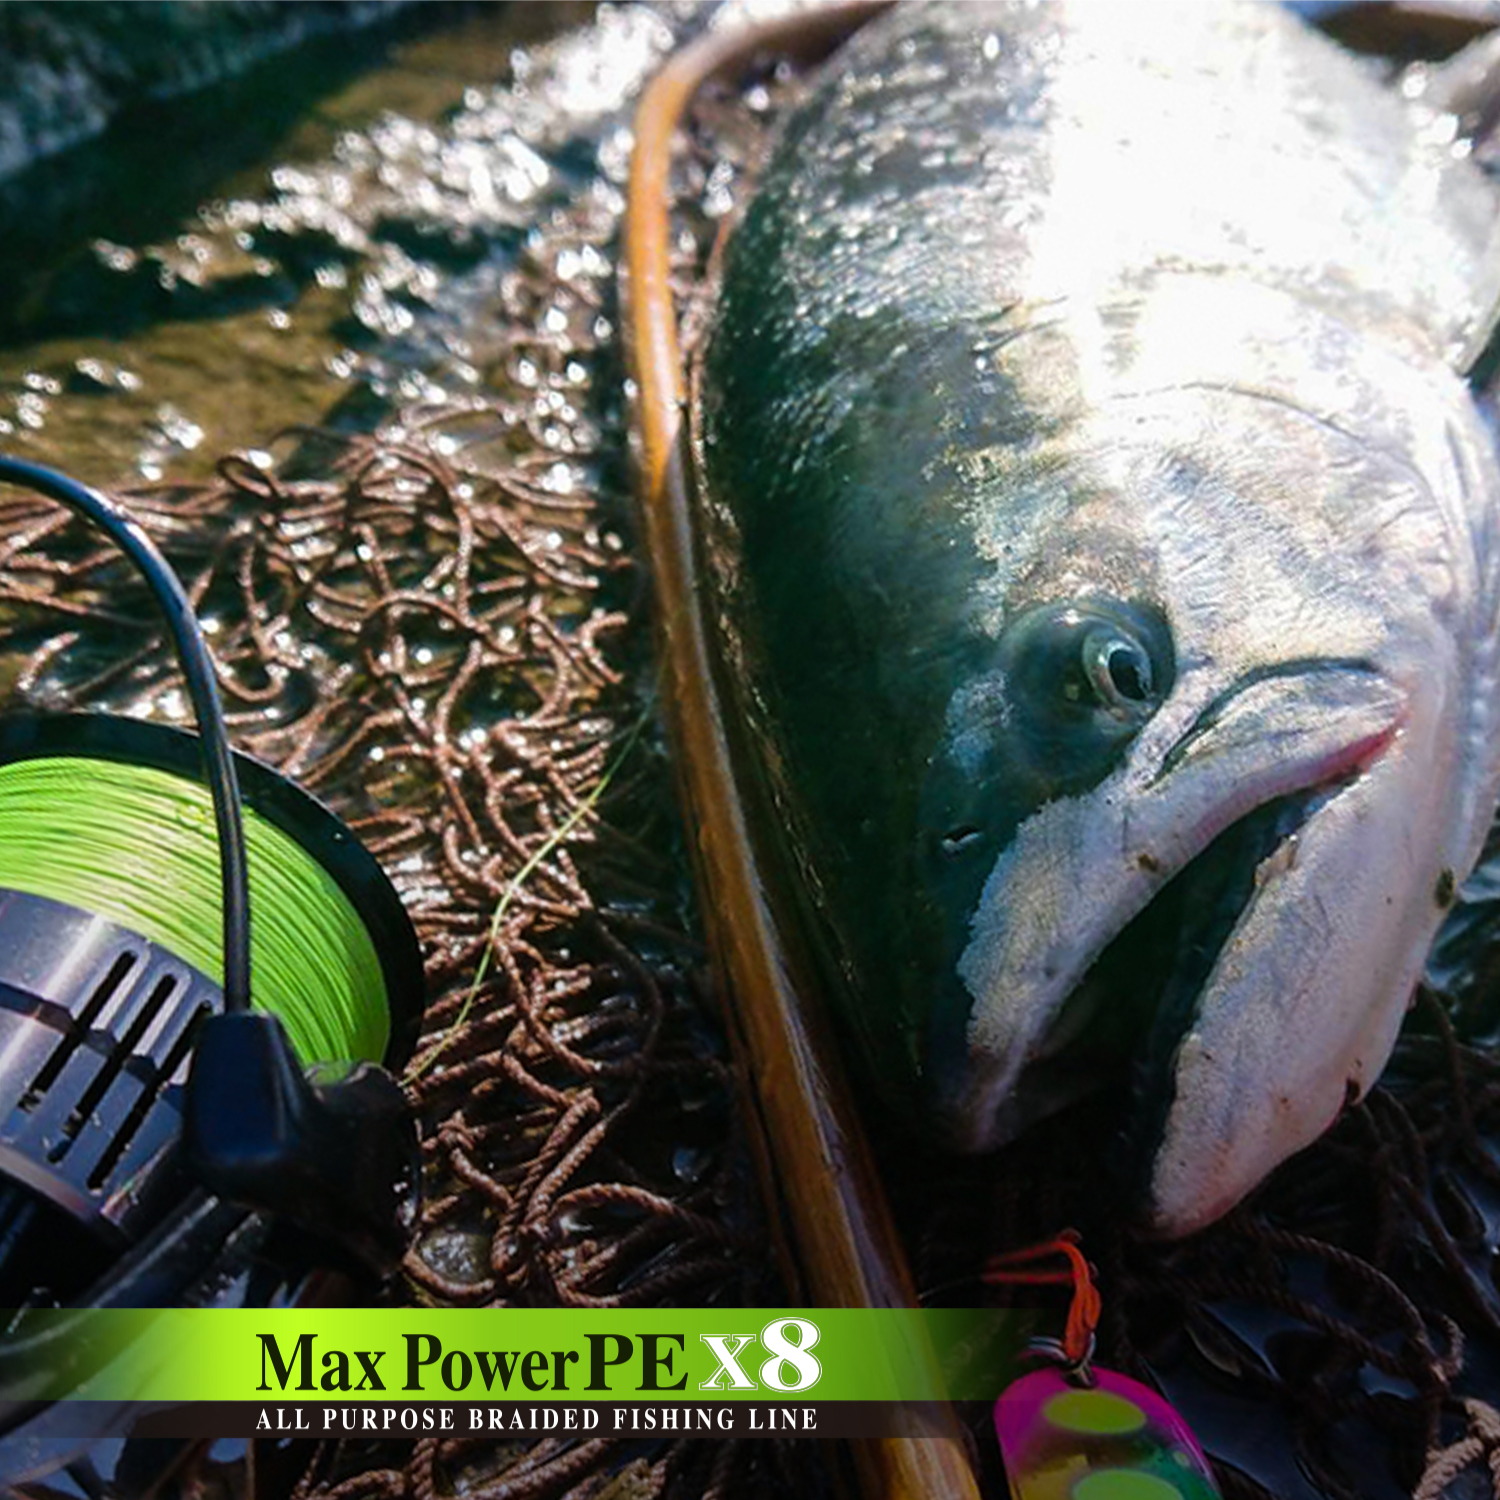 Treccia Varivas Max power PE X8 Lime Green 150mt 